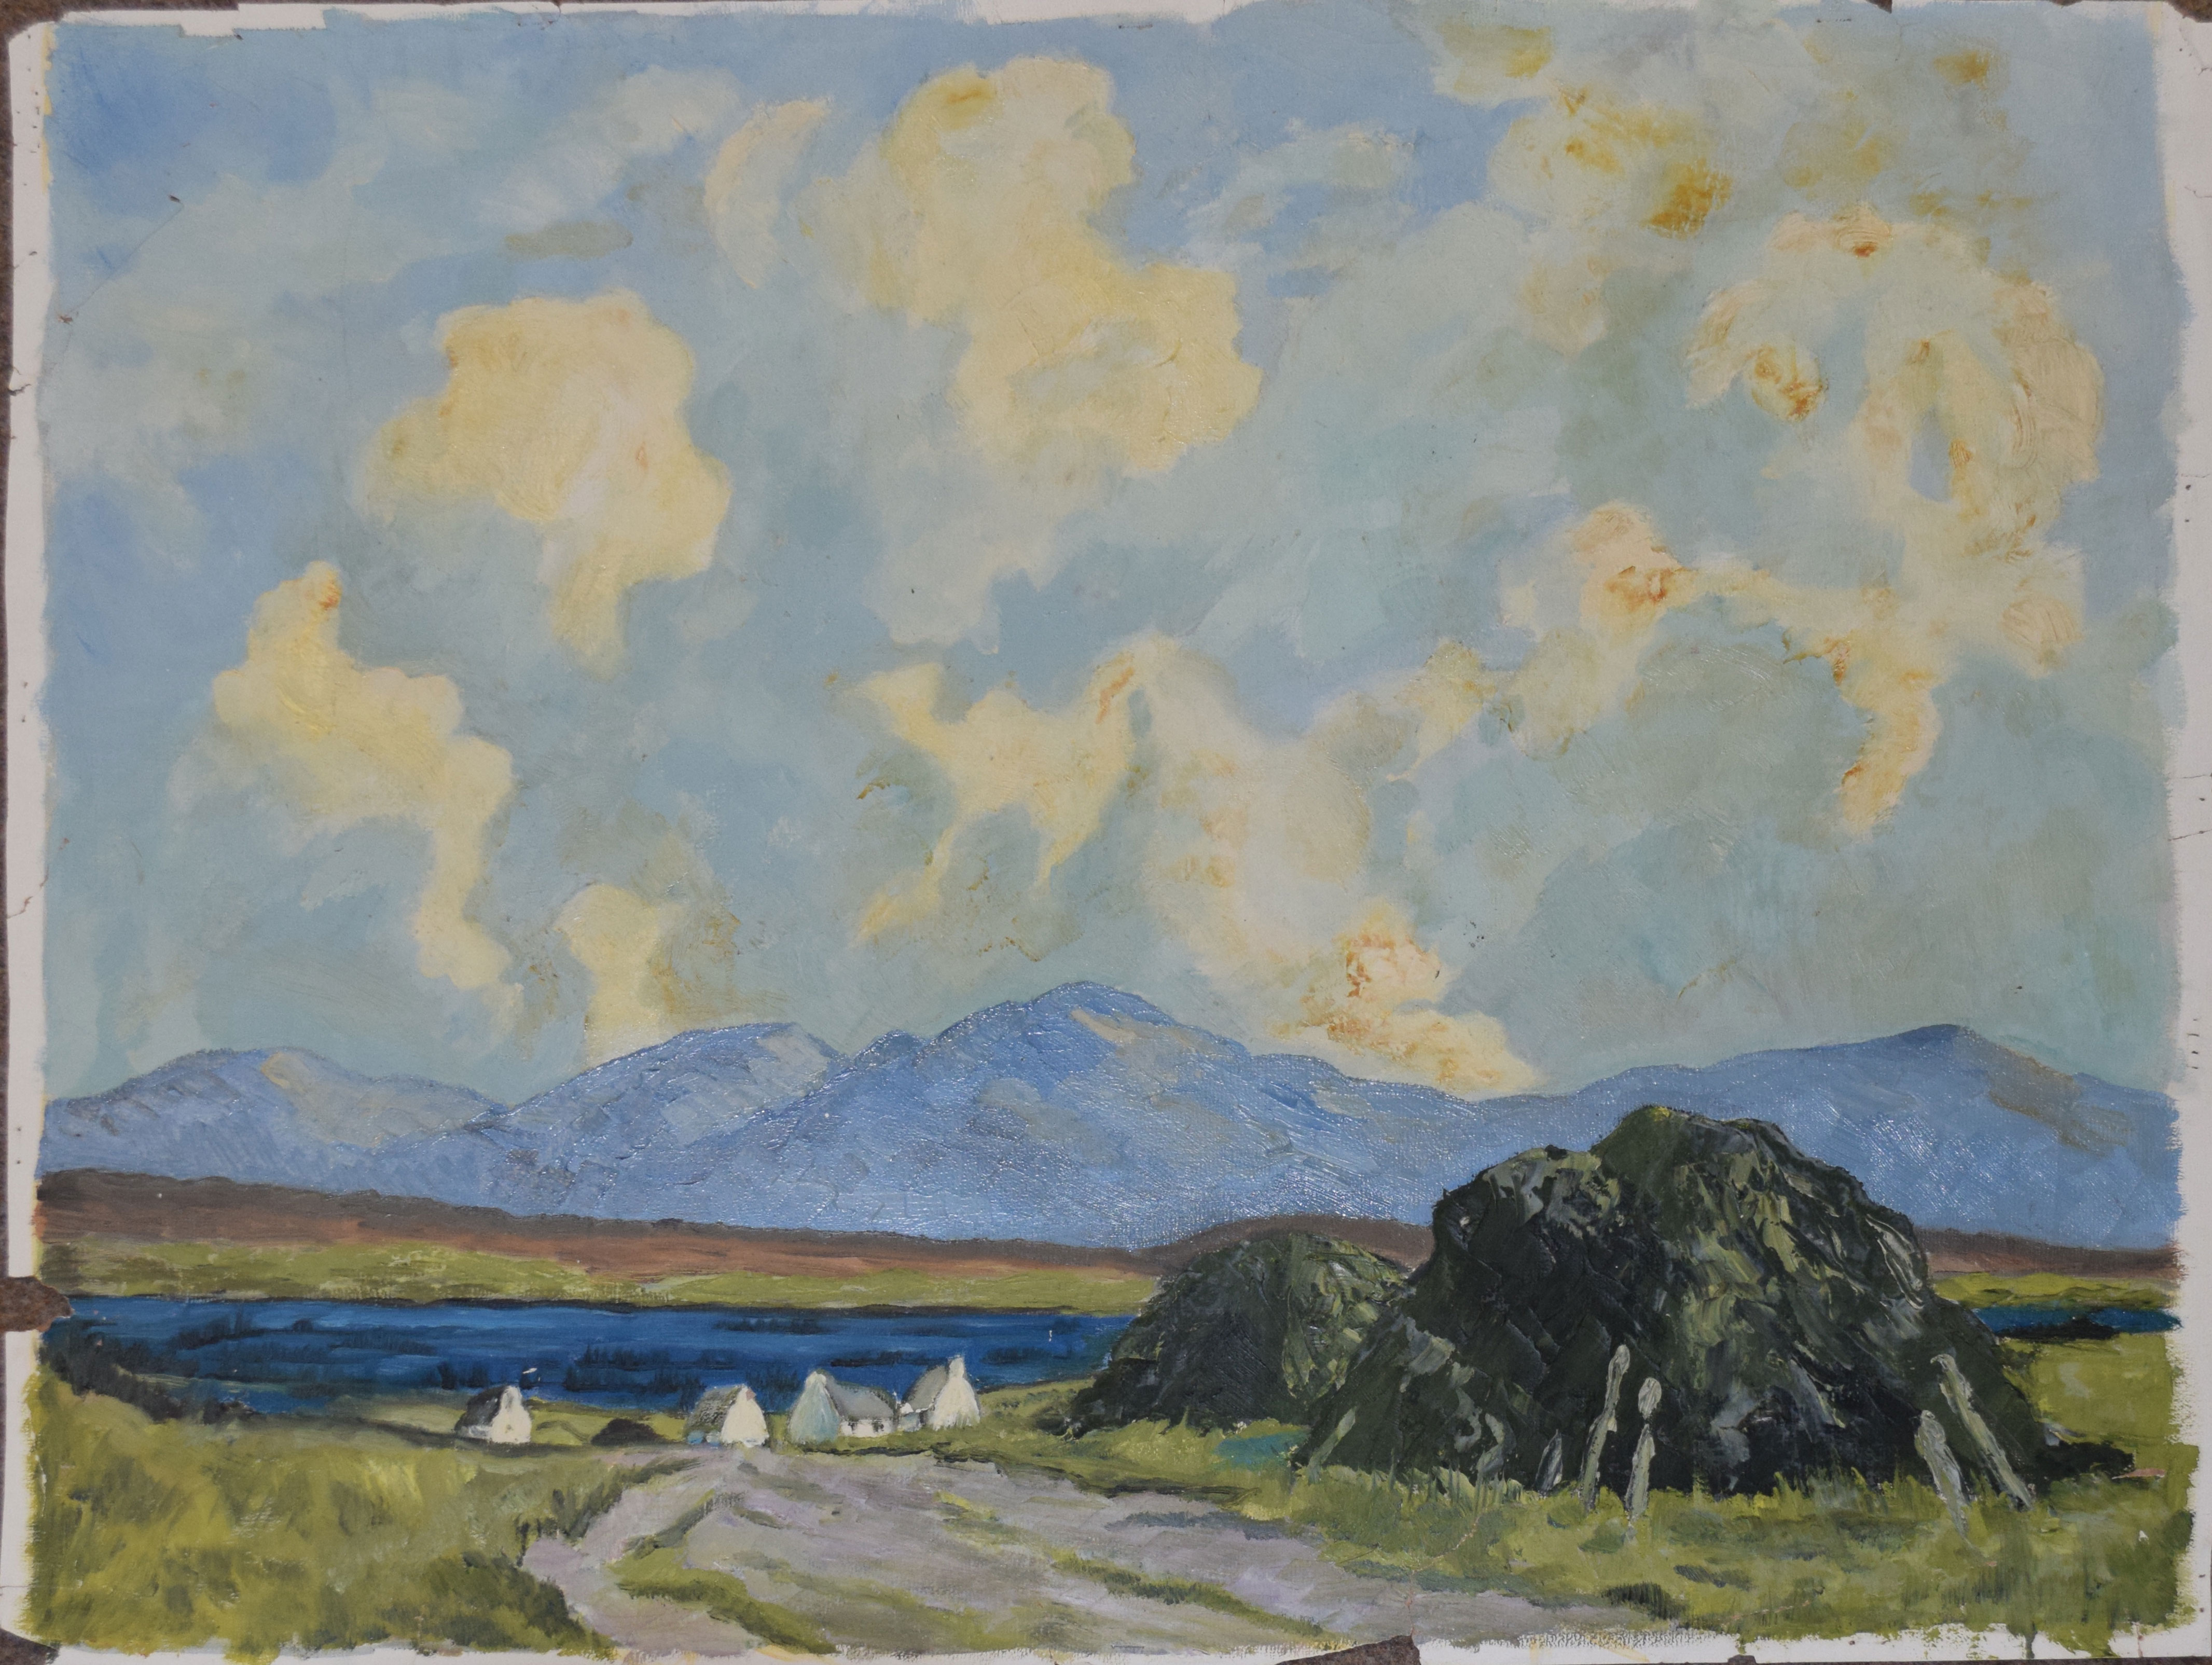 Modern School (20th century), An Irish landscape, mixed media on paper, 50 x 68cm A/F, unframed